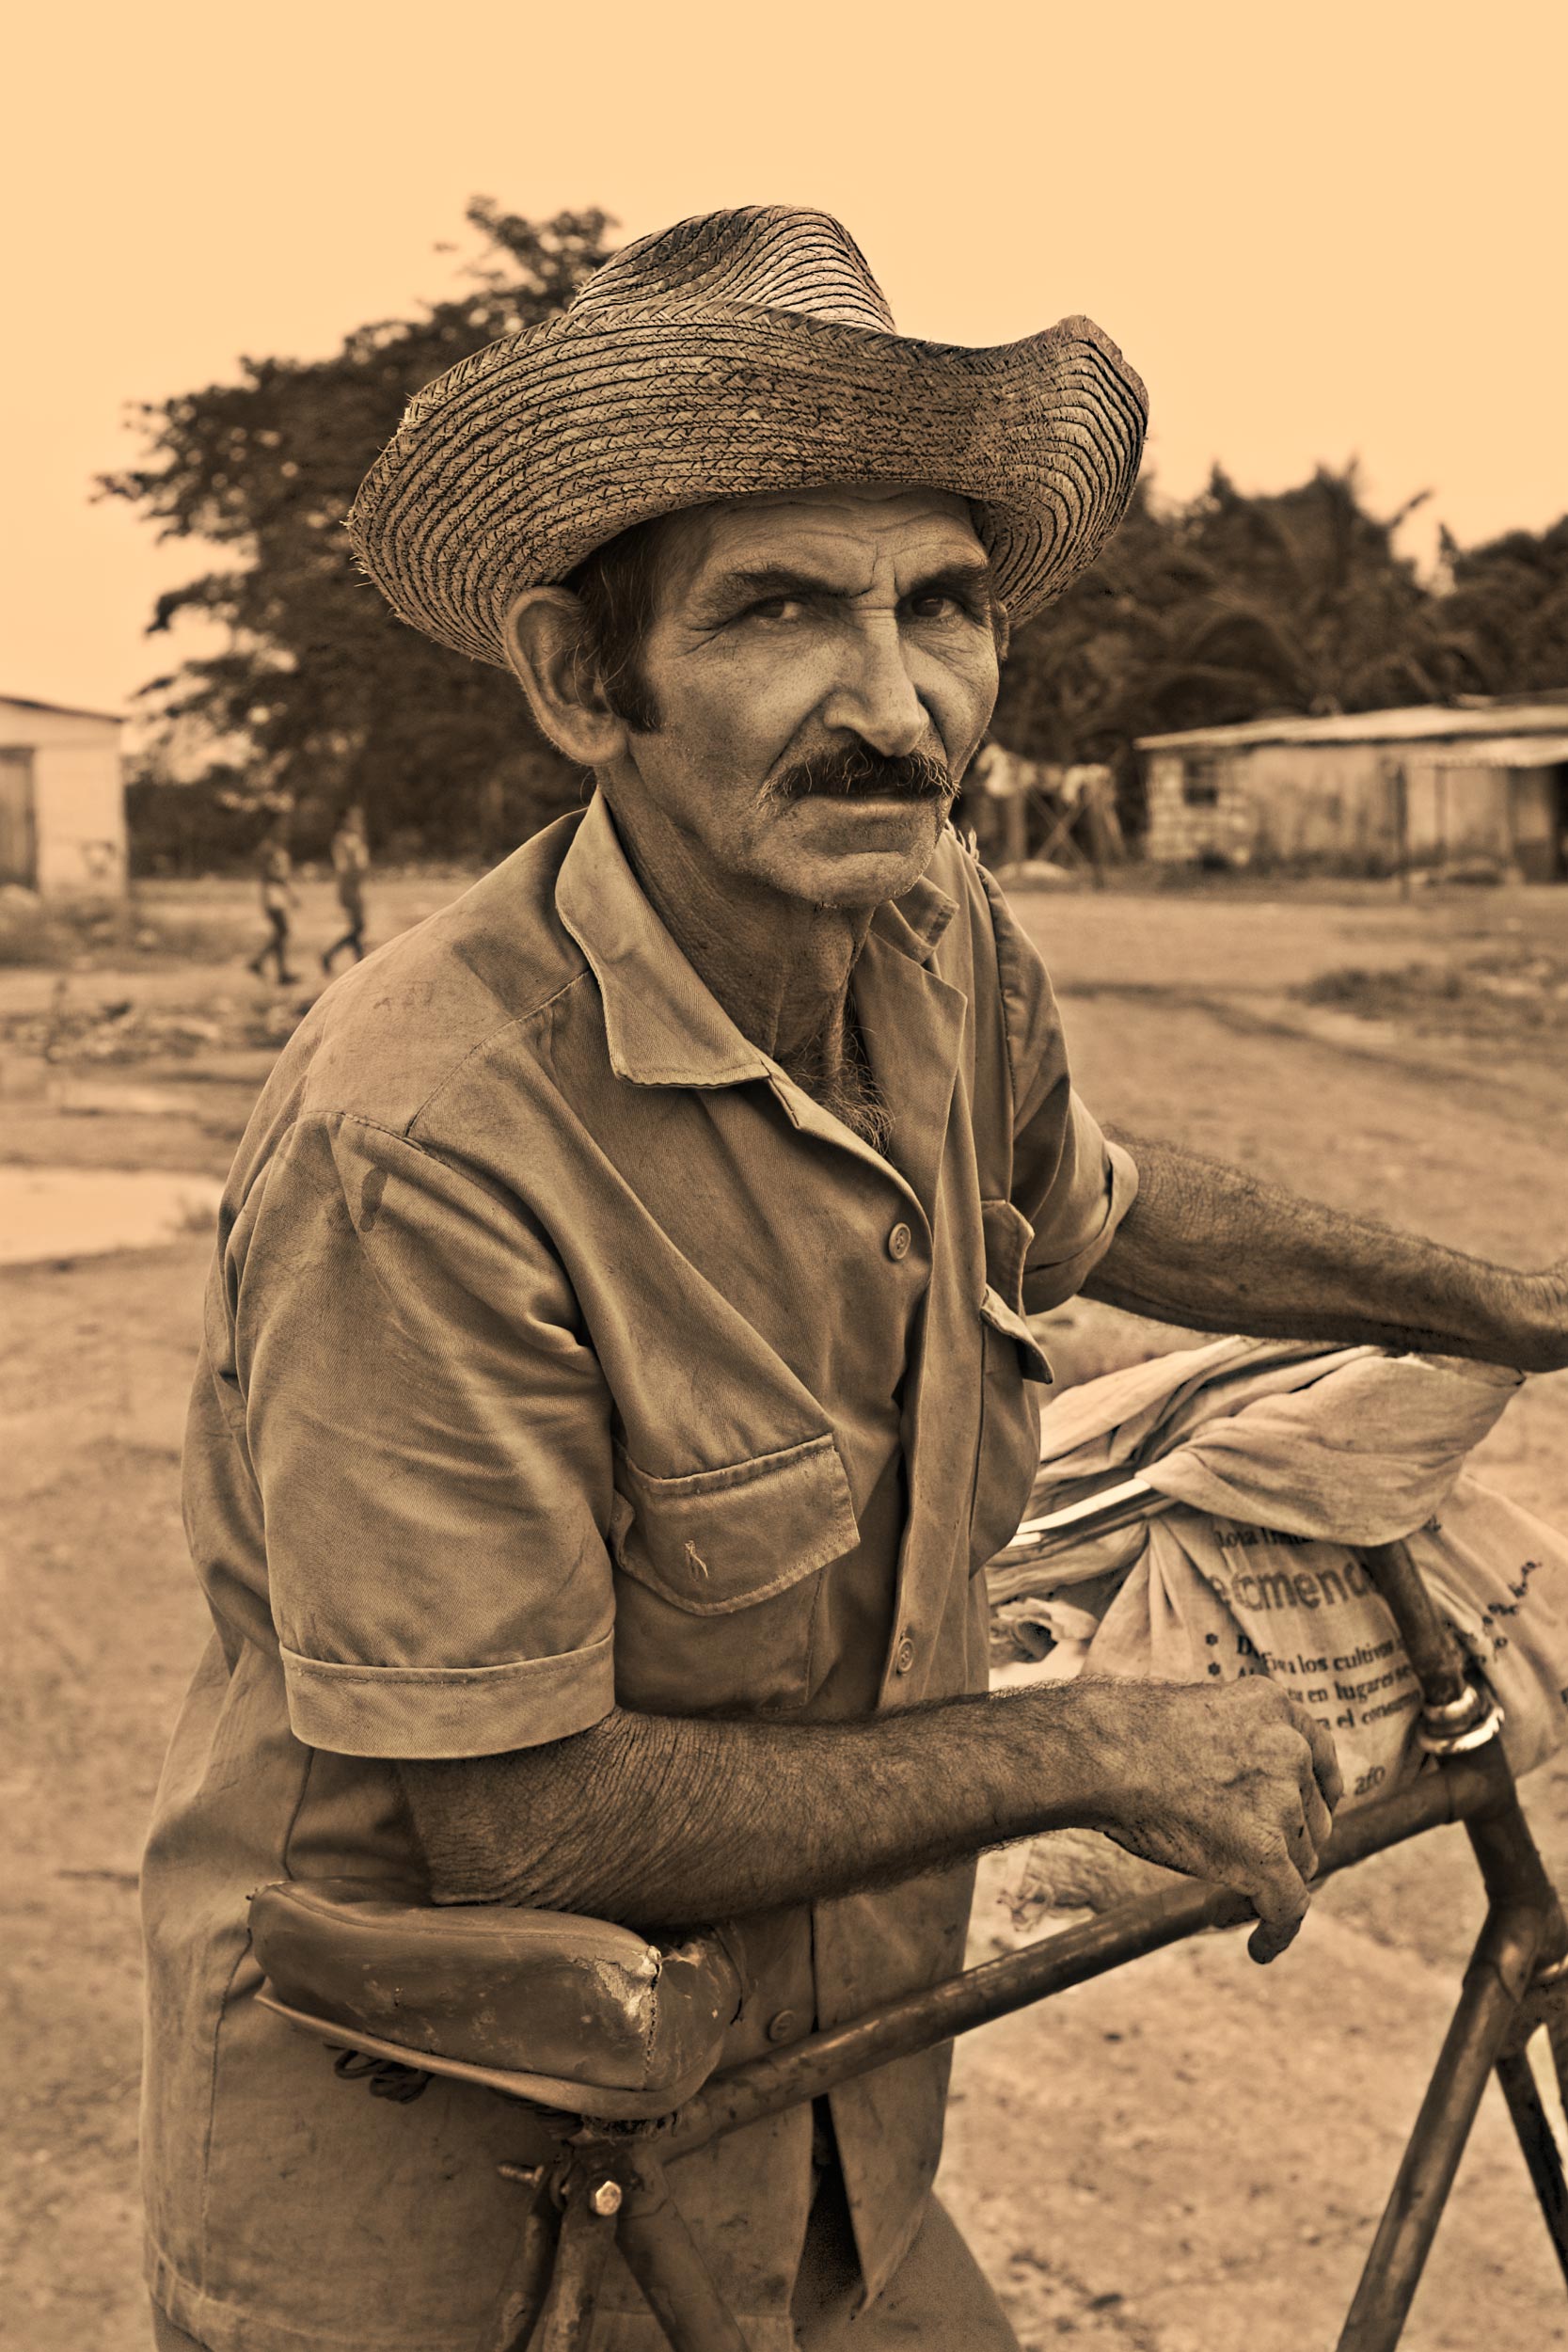 Cuba-laborer-web